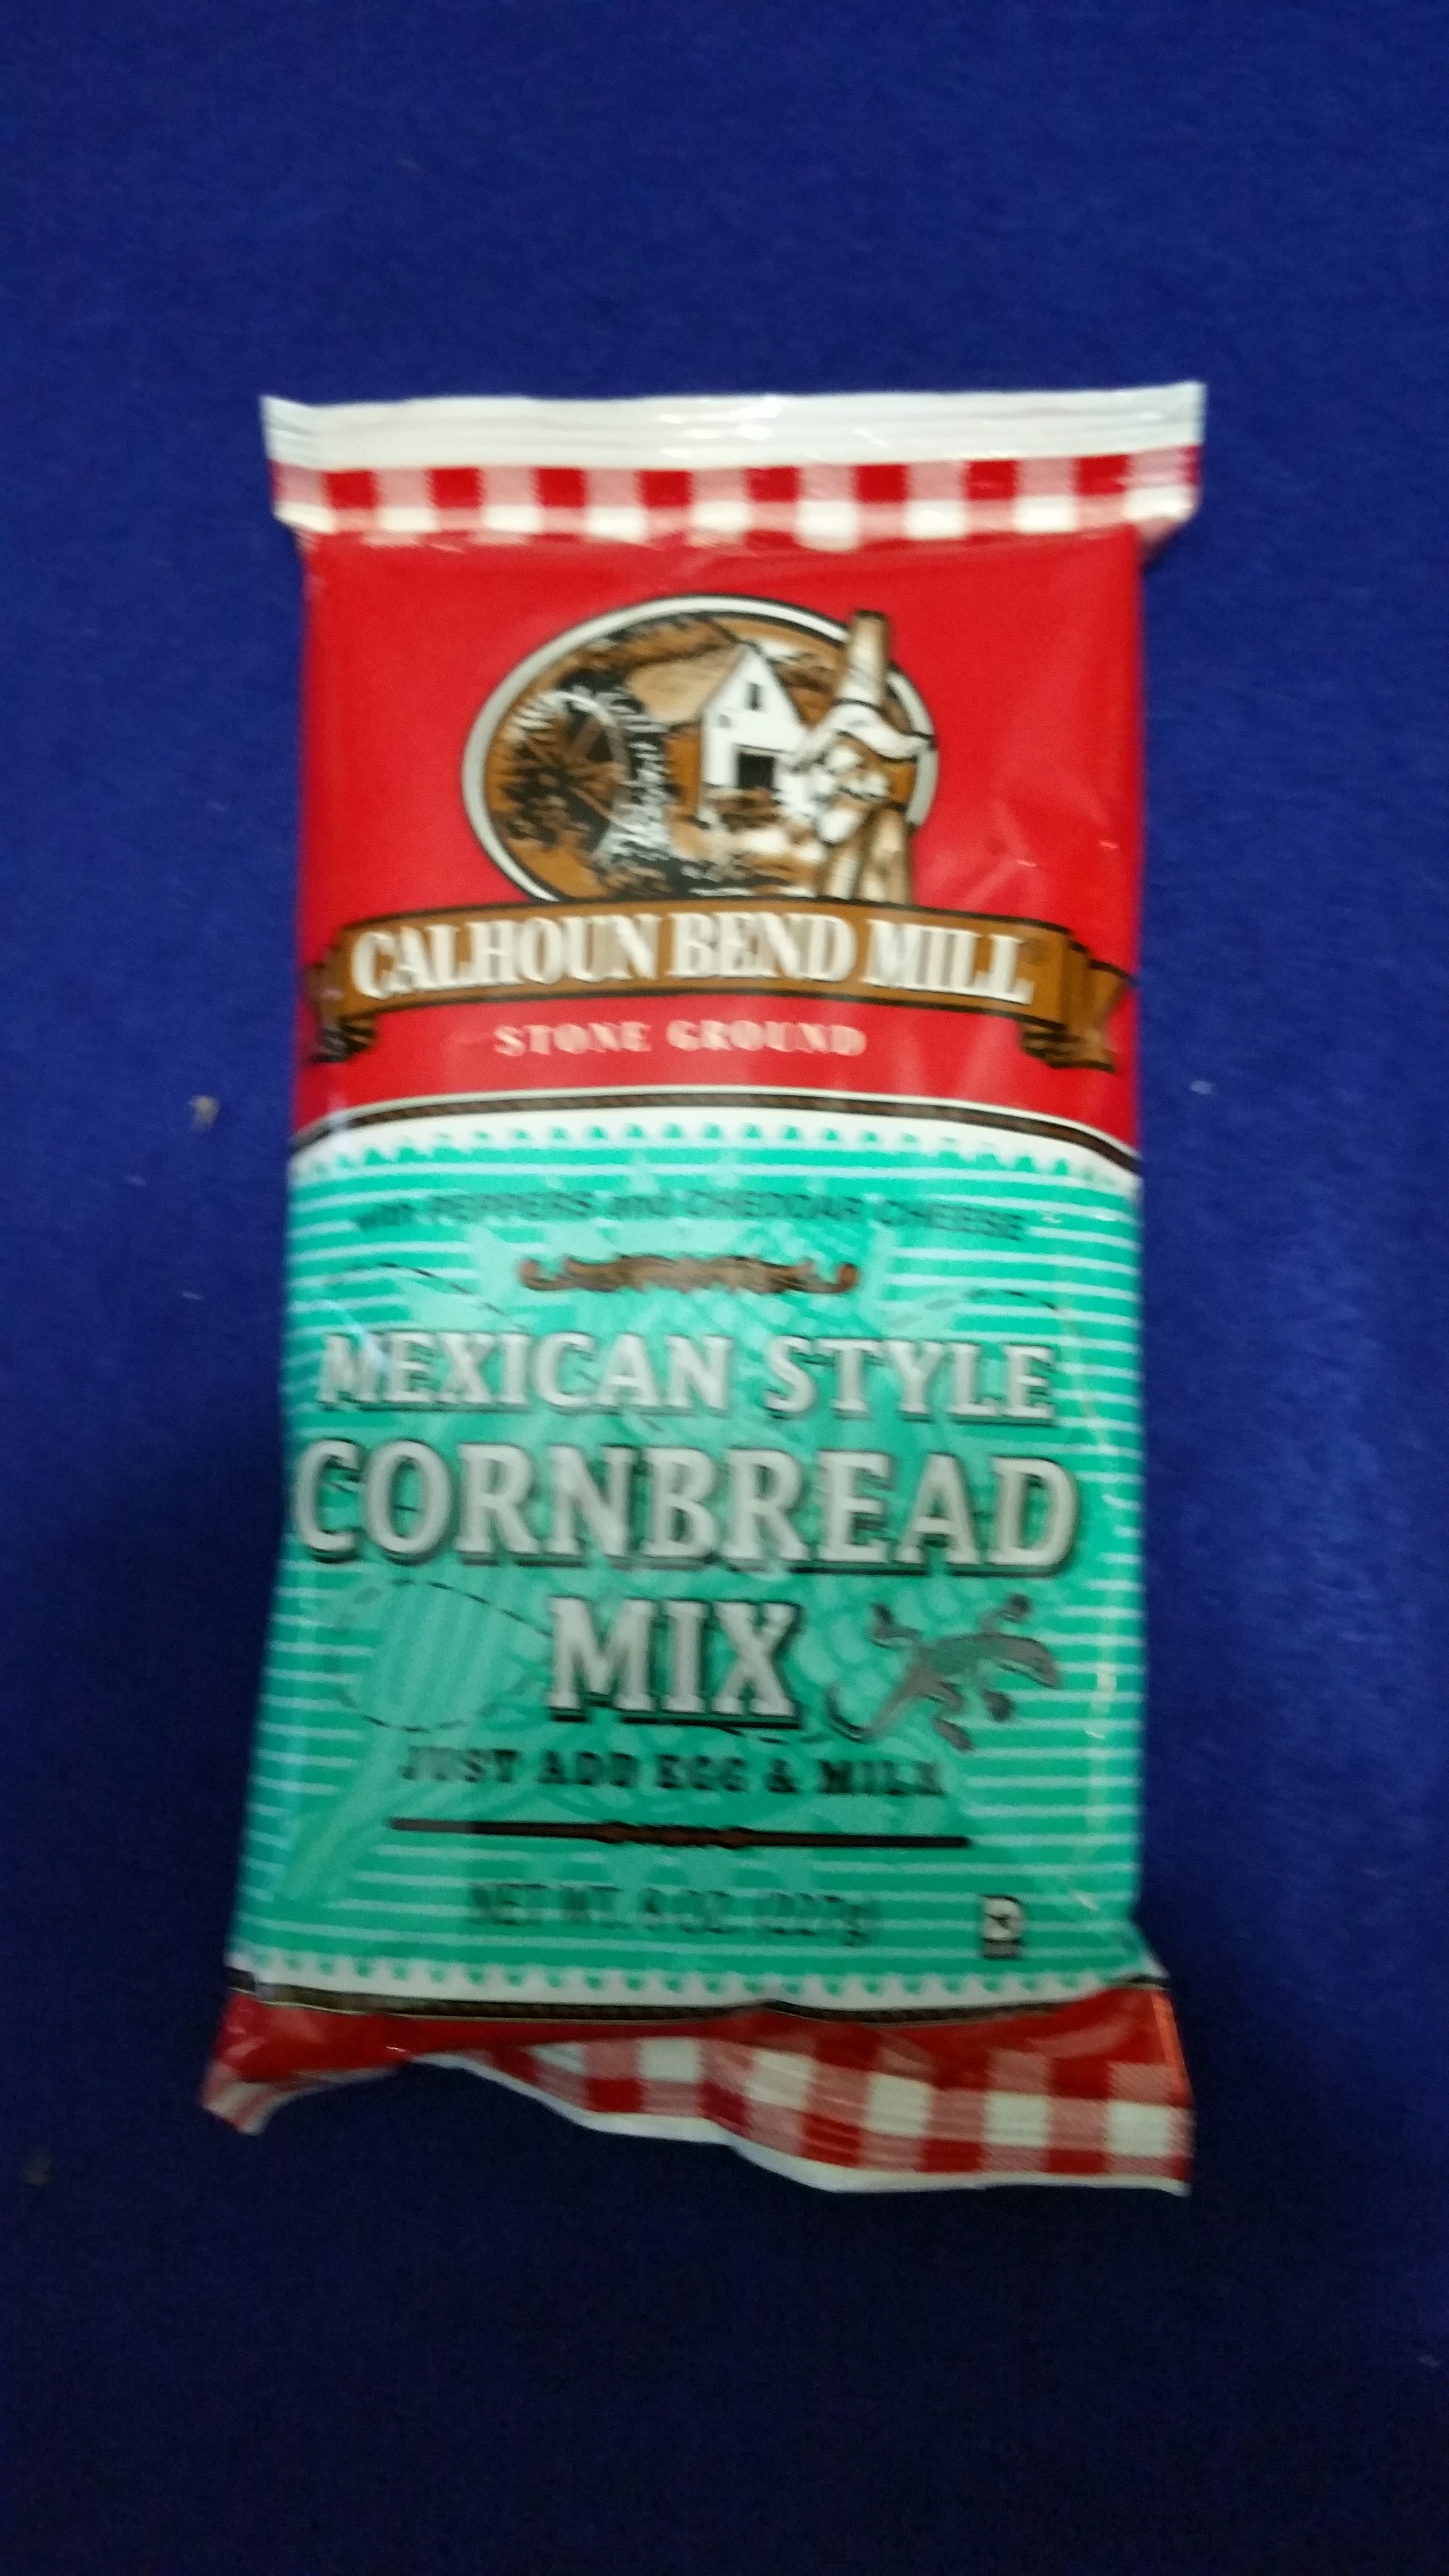 Mexican Style Cornbread Mix - Calhoun Bend Mill